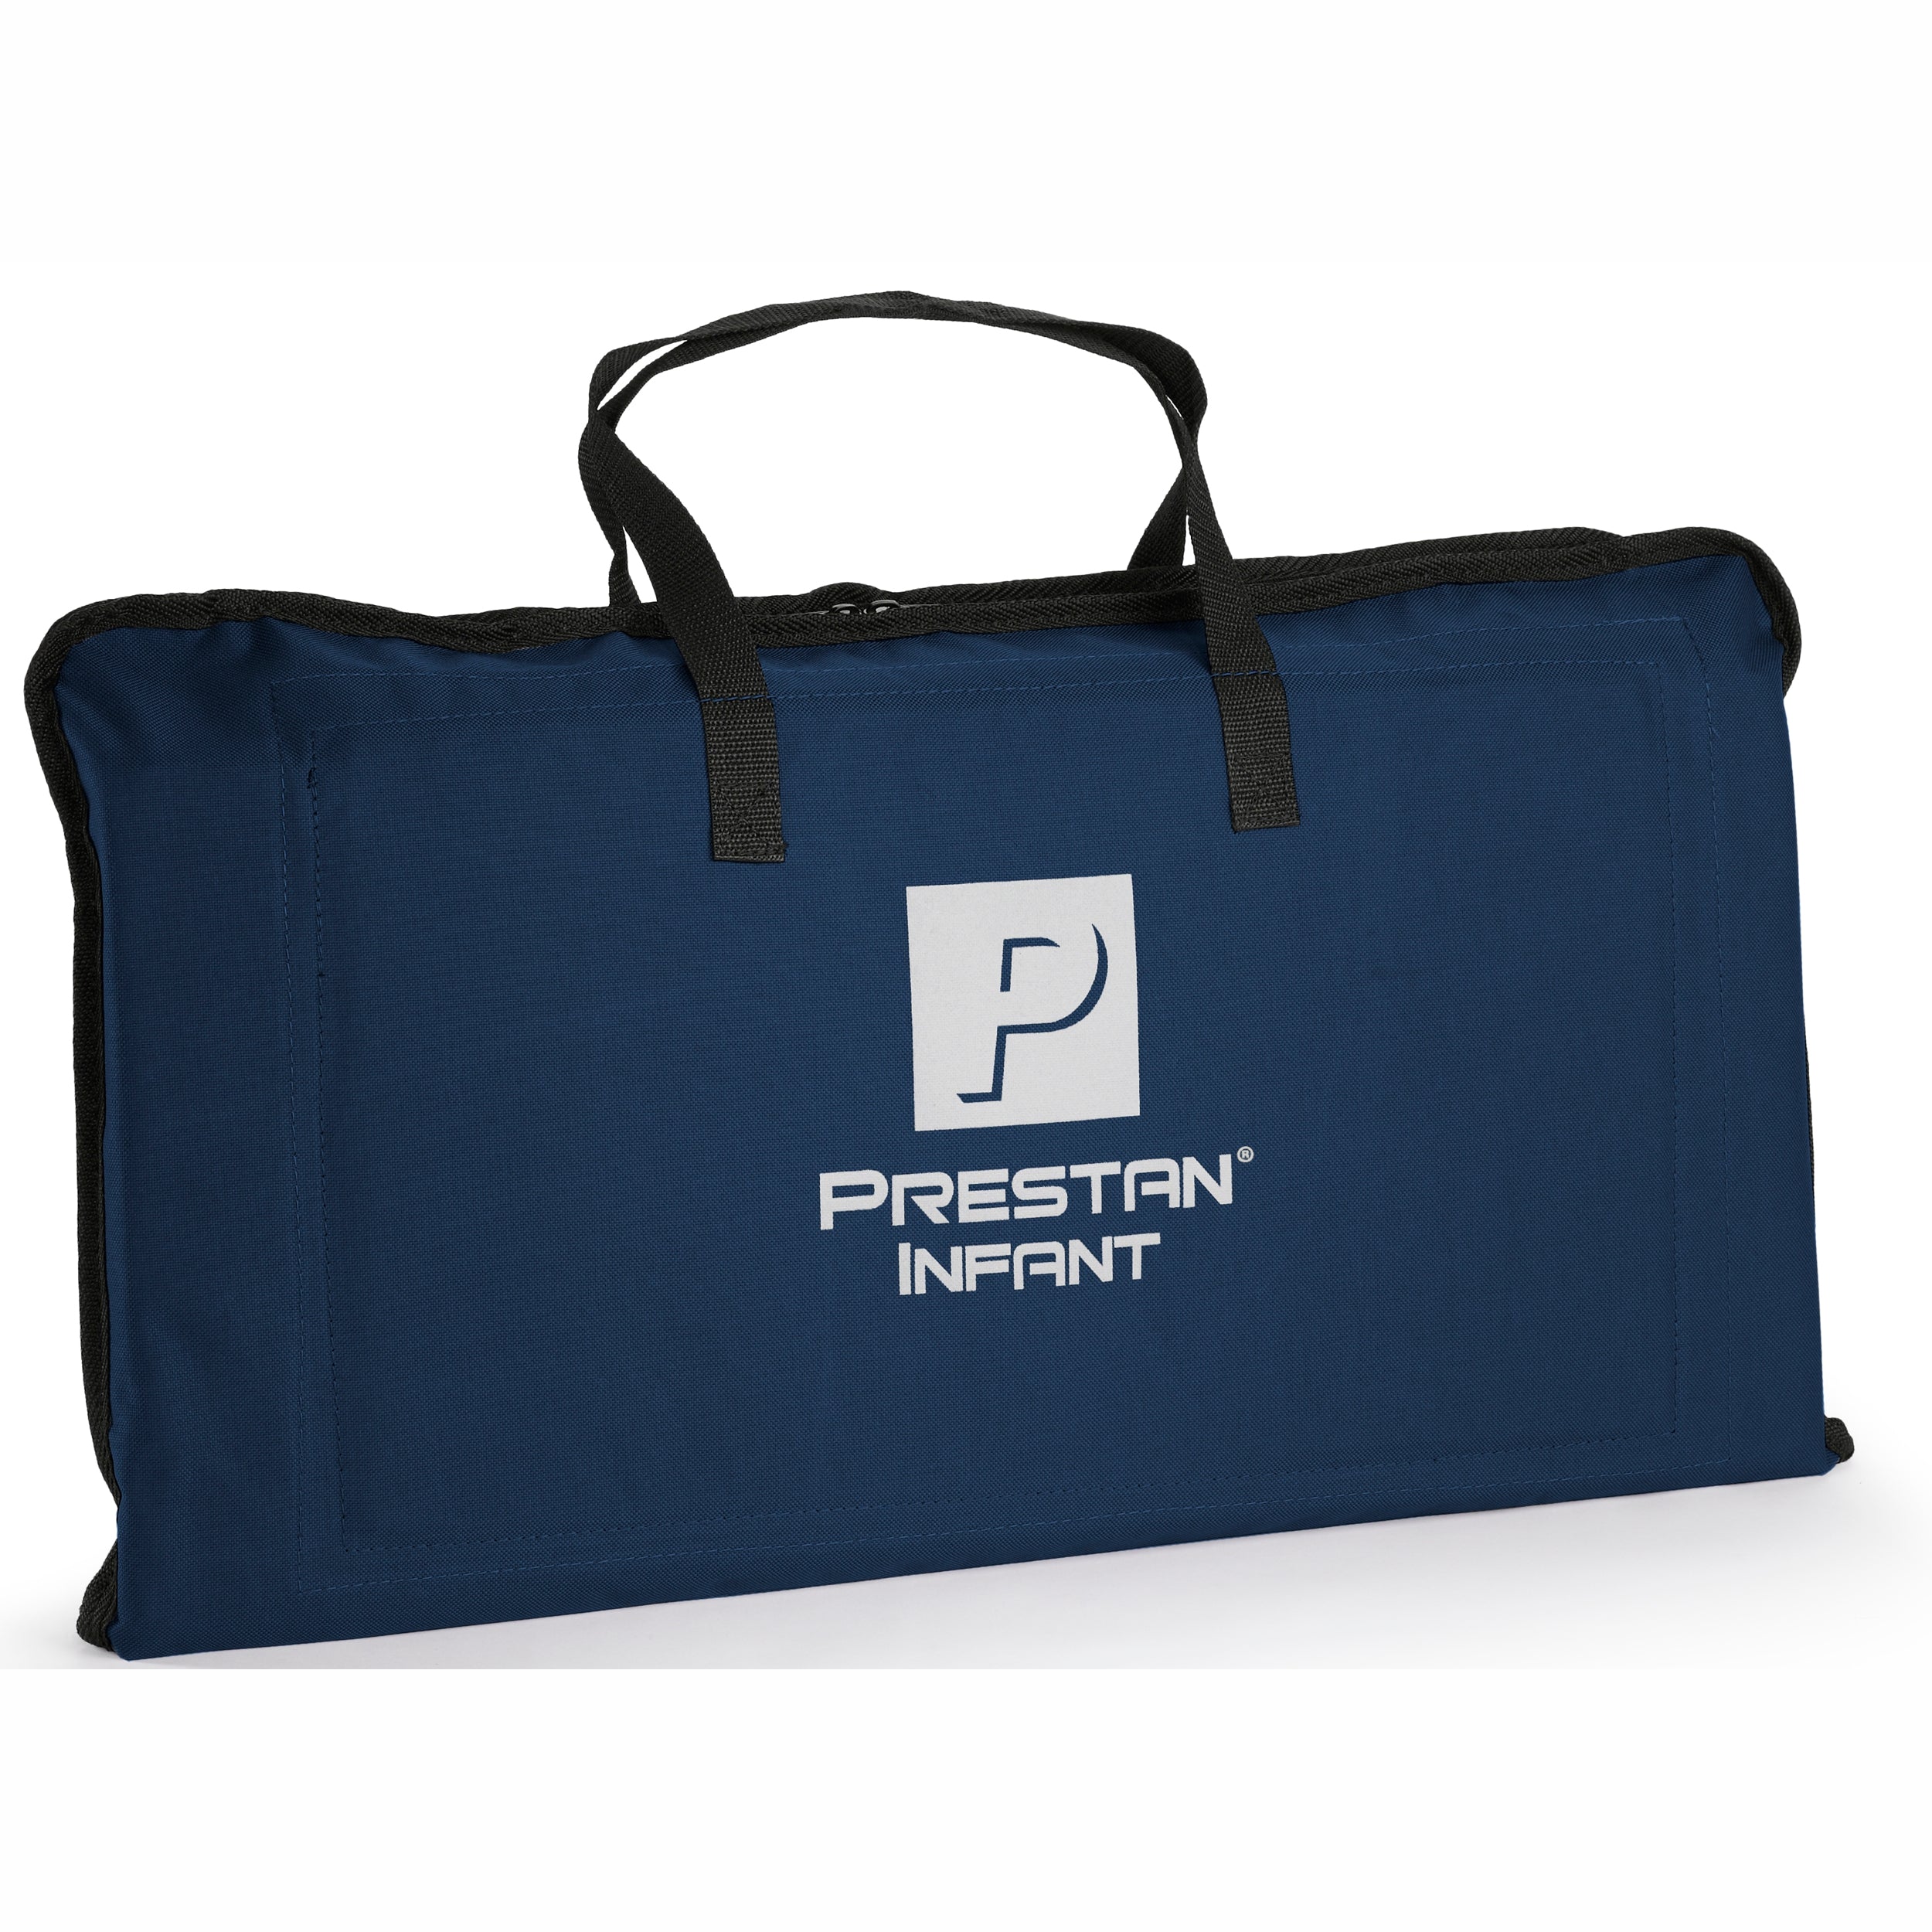 Prestan Infant Single Carry Bag | Prestan | Available from LivCor Australia